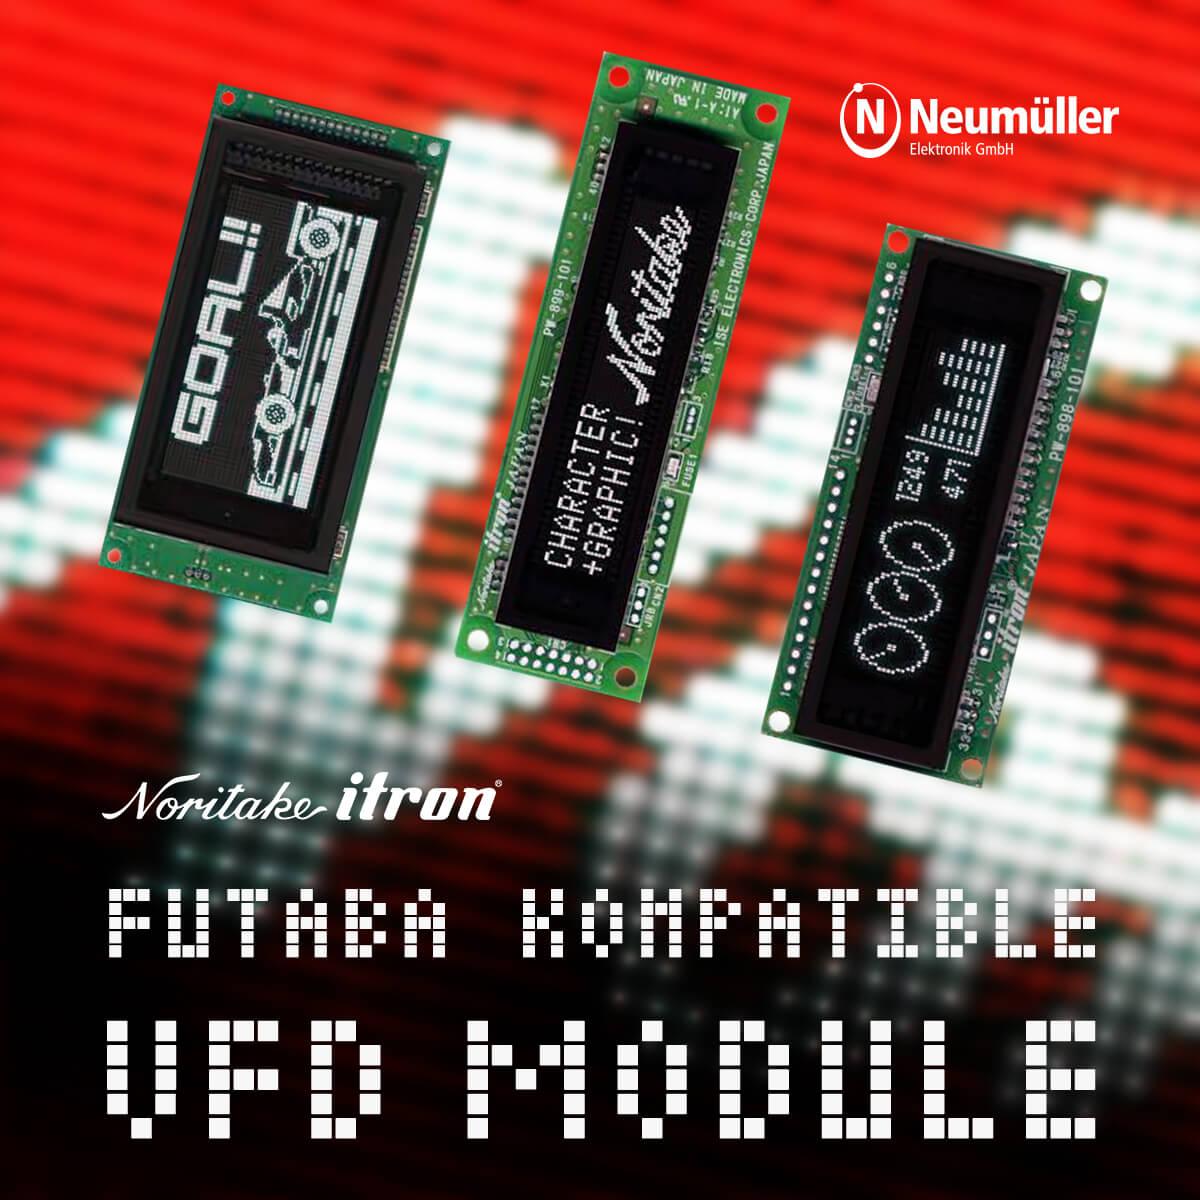 Futaba compatible VFD modules from Noritake Itron